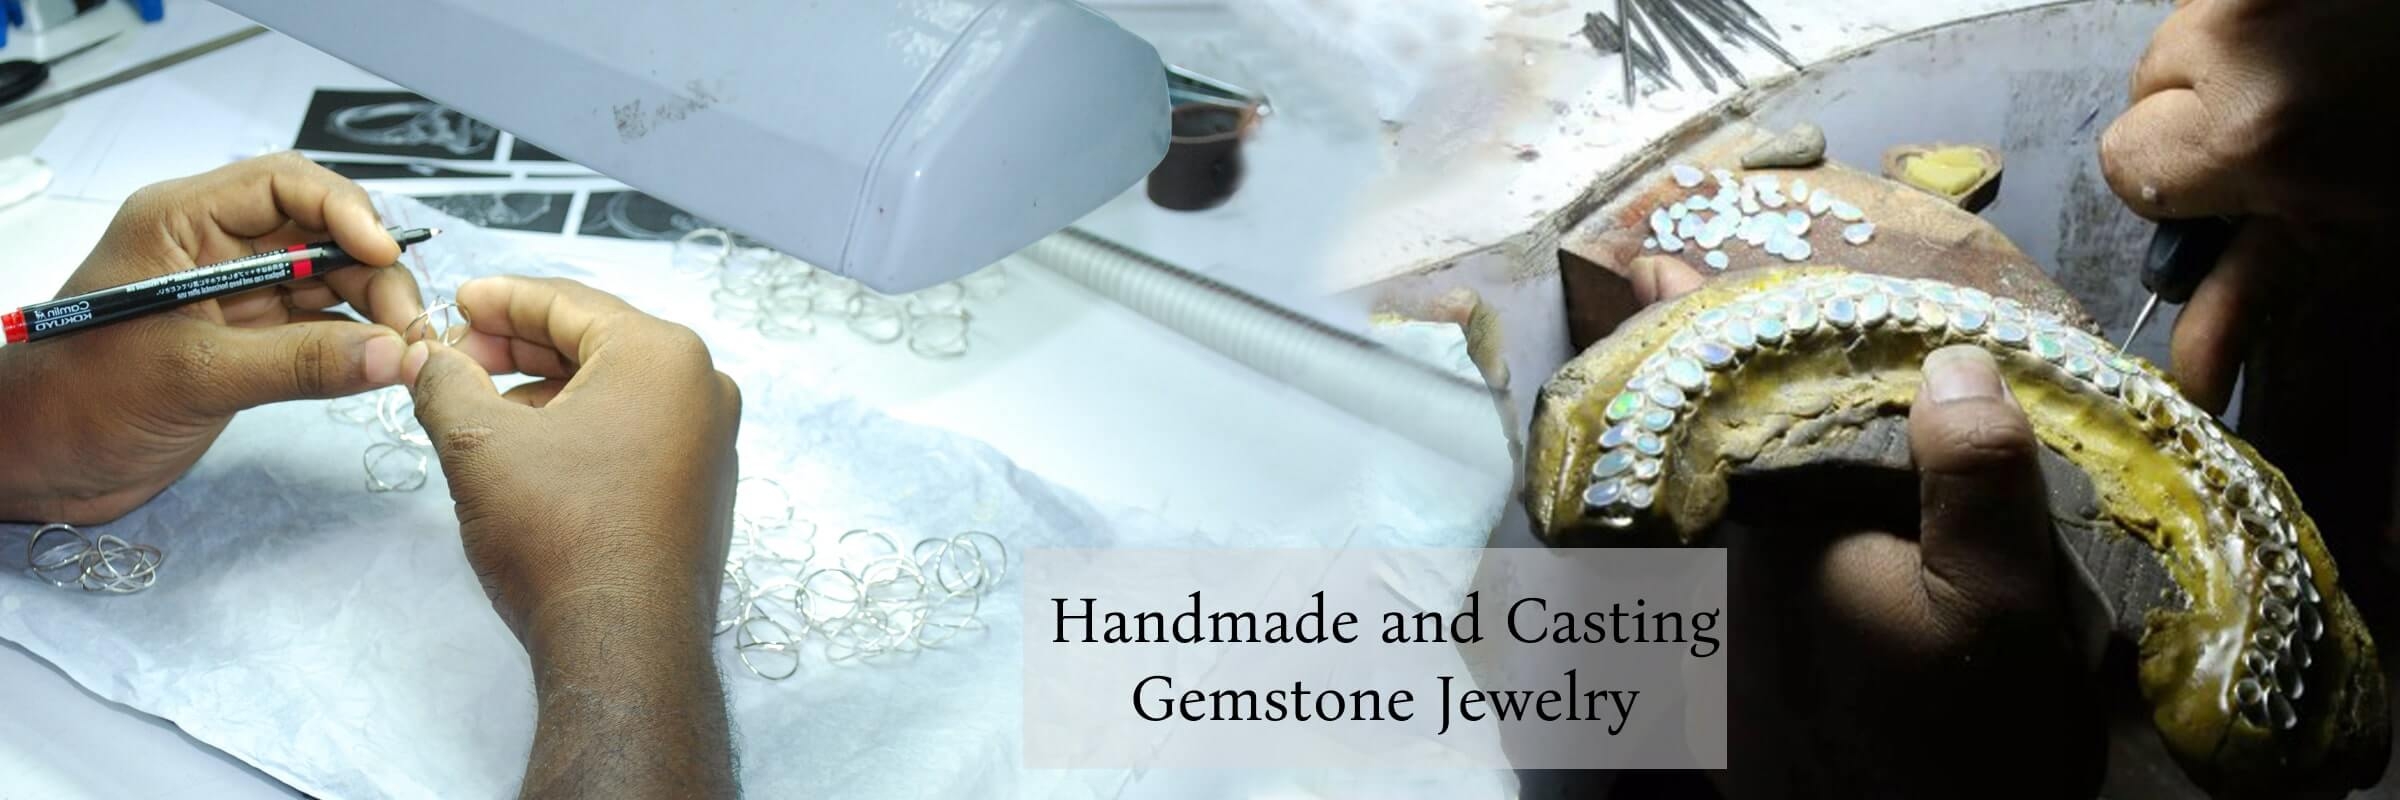 handmade and casting gemstone jewelry manufacturing